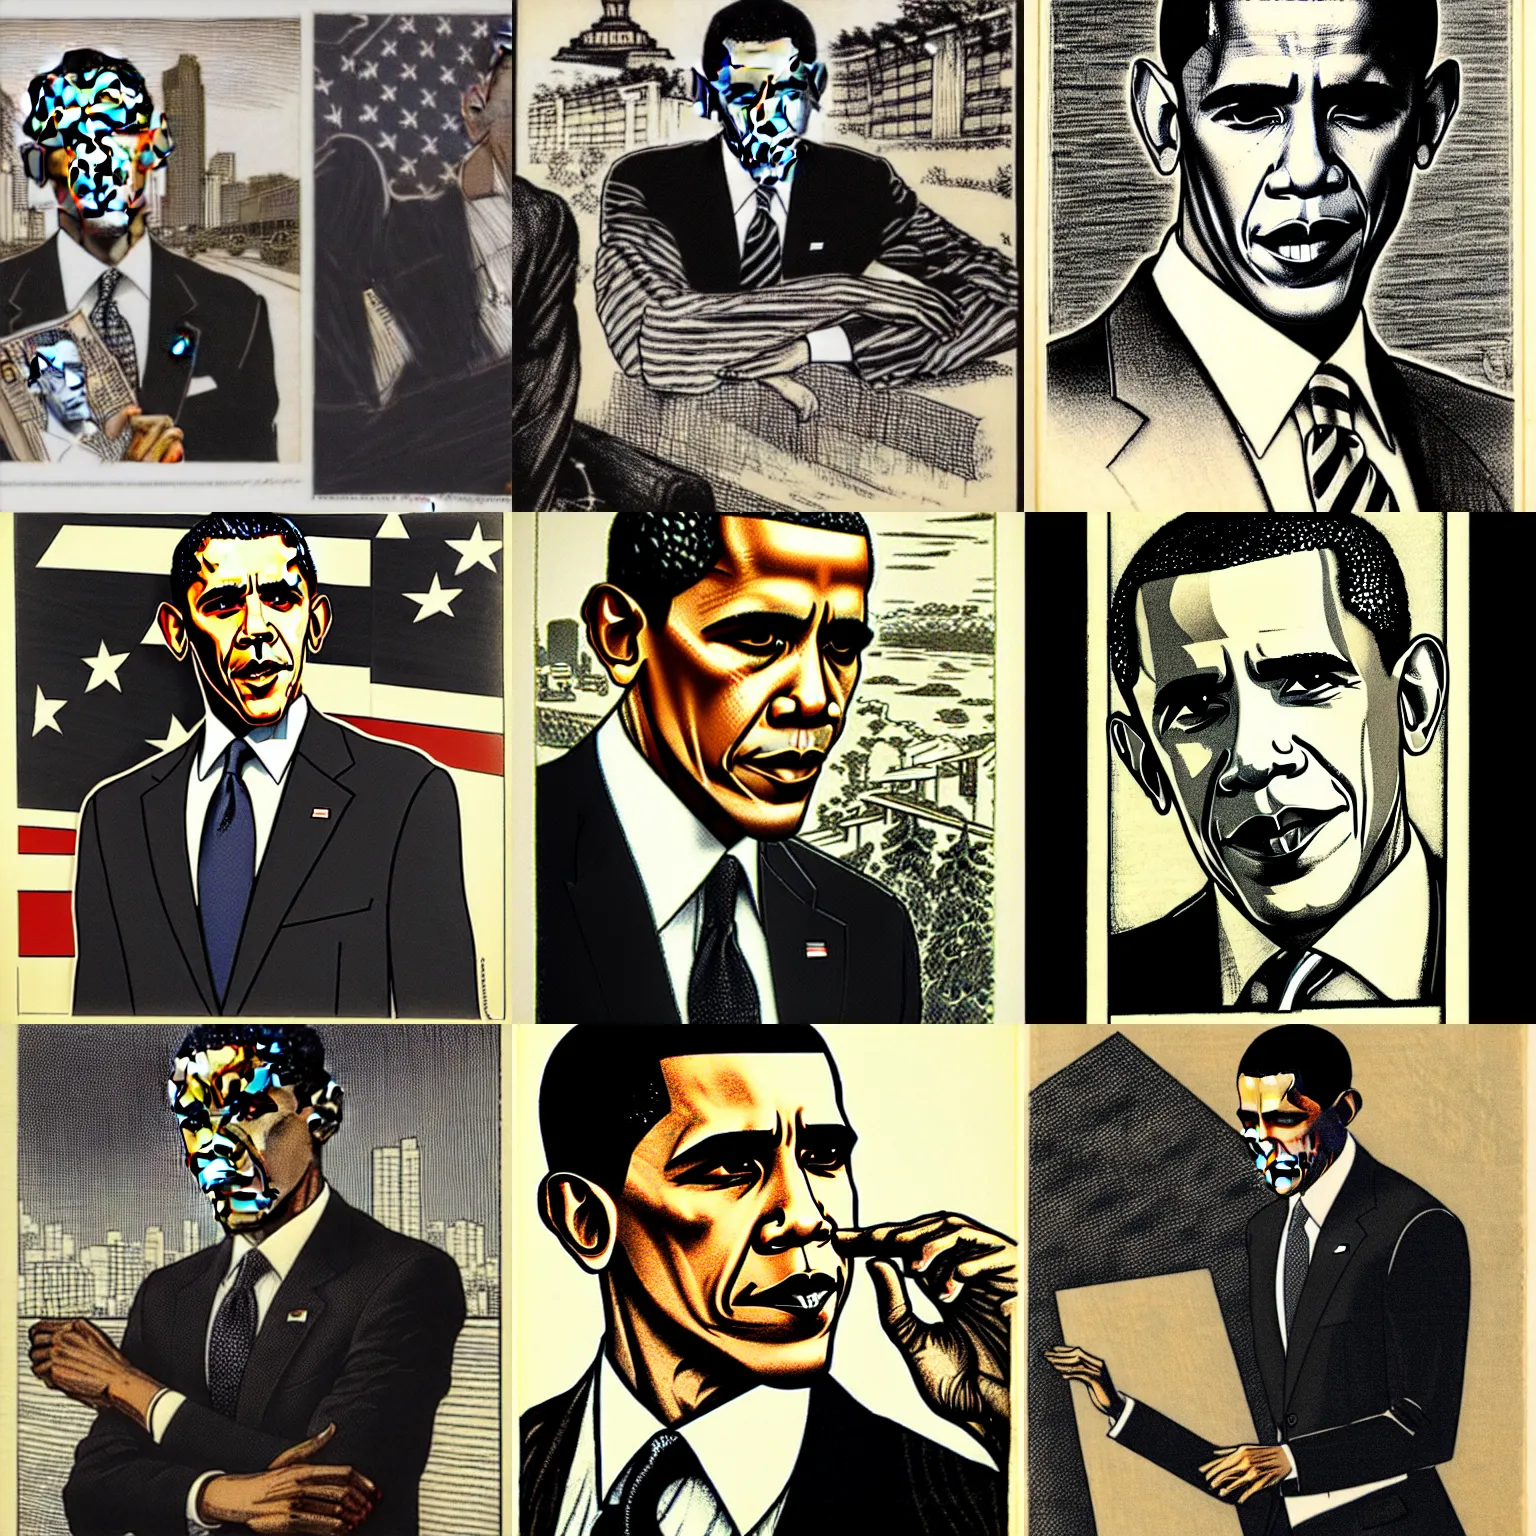 Prompt: james tissot woodblock print of barack obama as a gta character